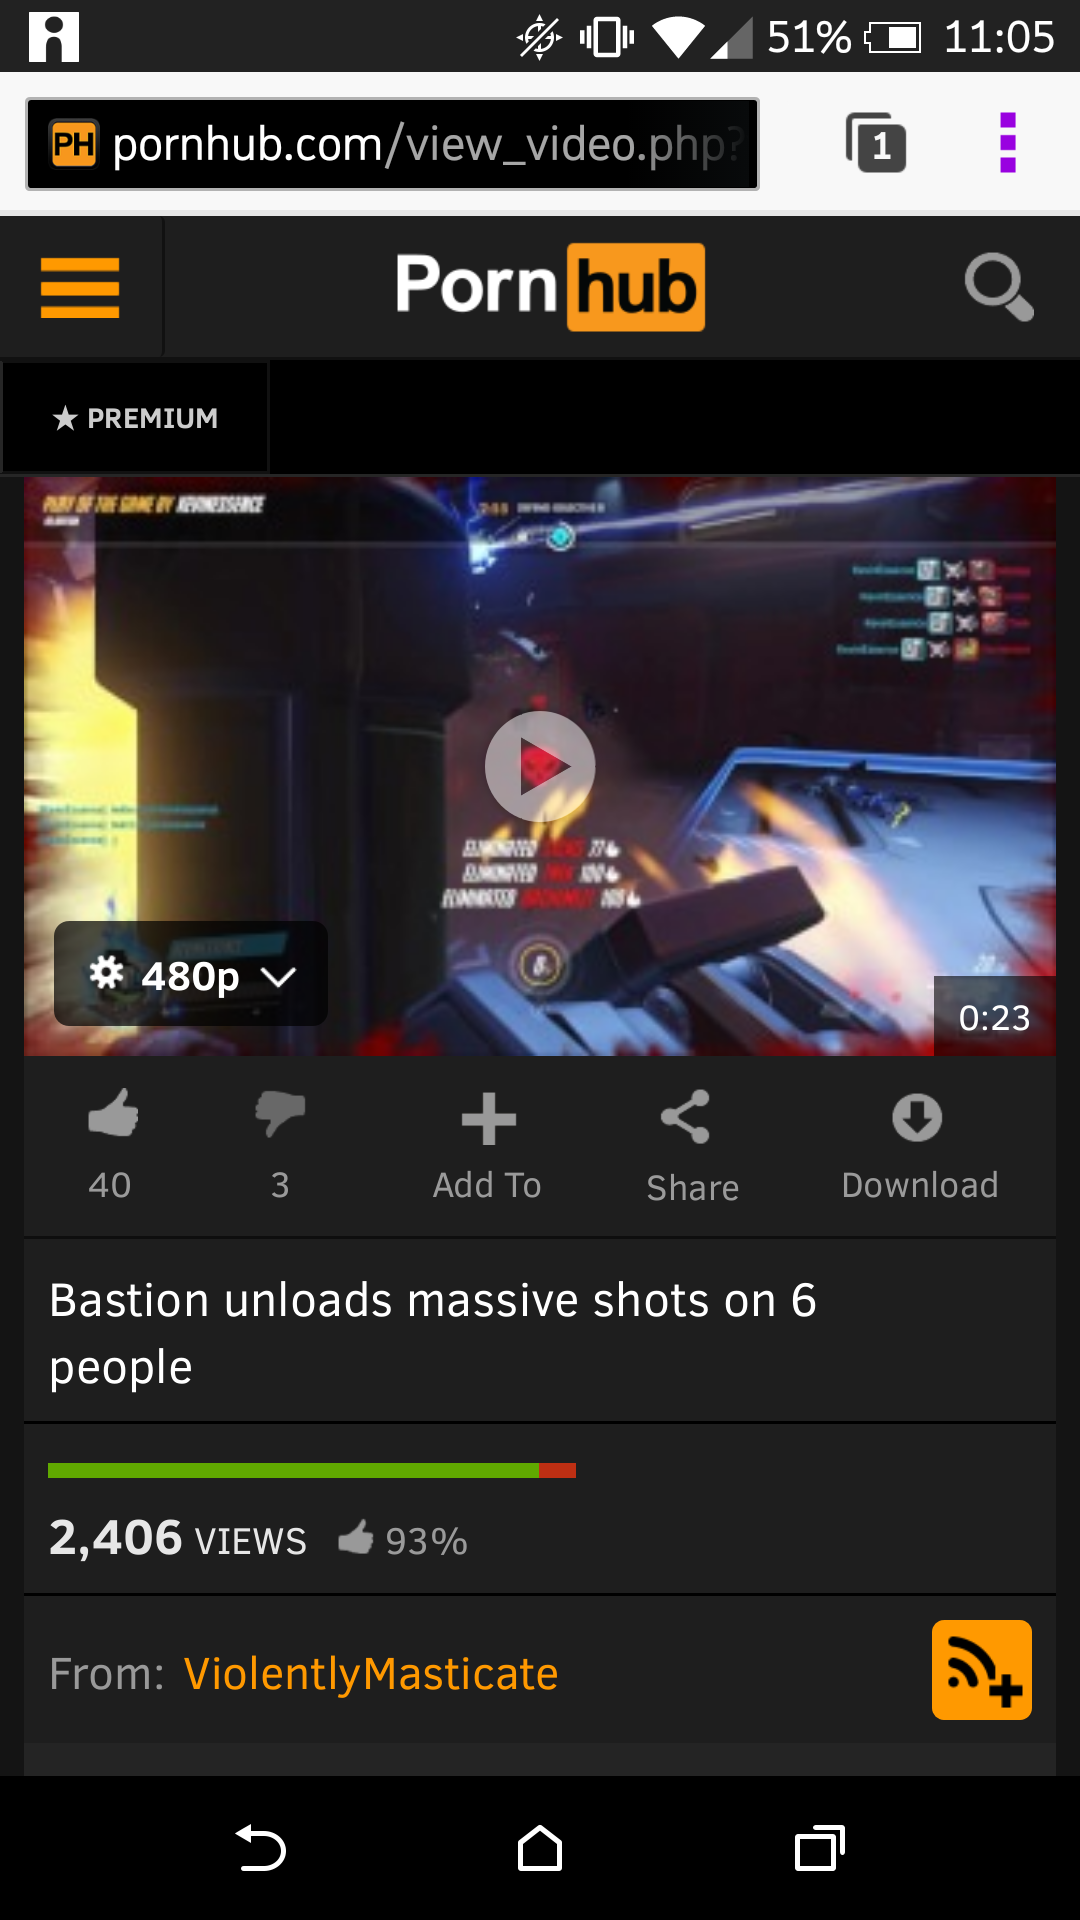 Bastion unloads massive shots people